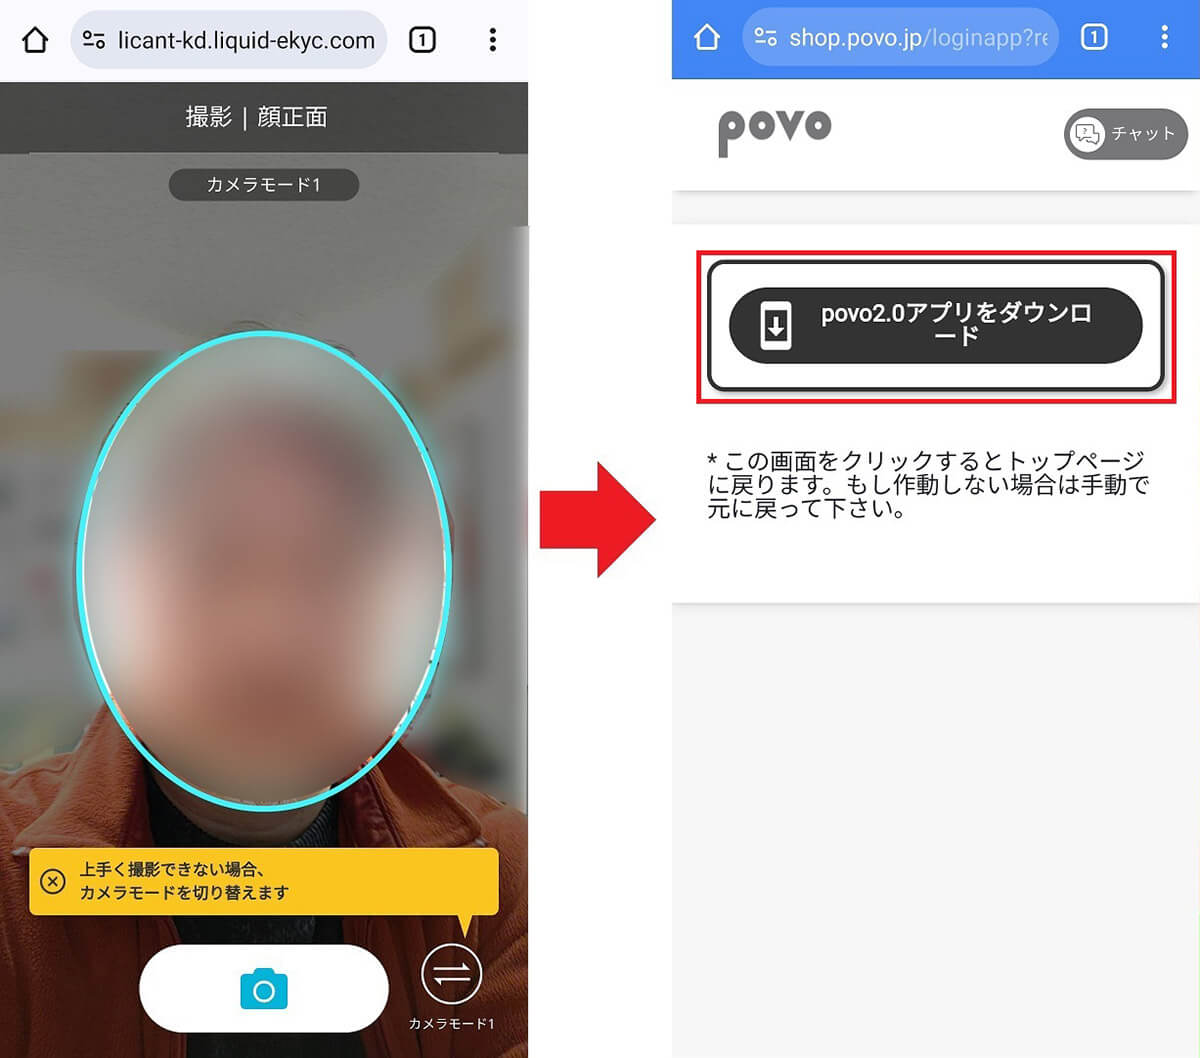 povo2.0アプリで本人確認作業をする手順6